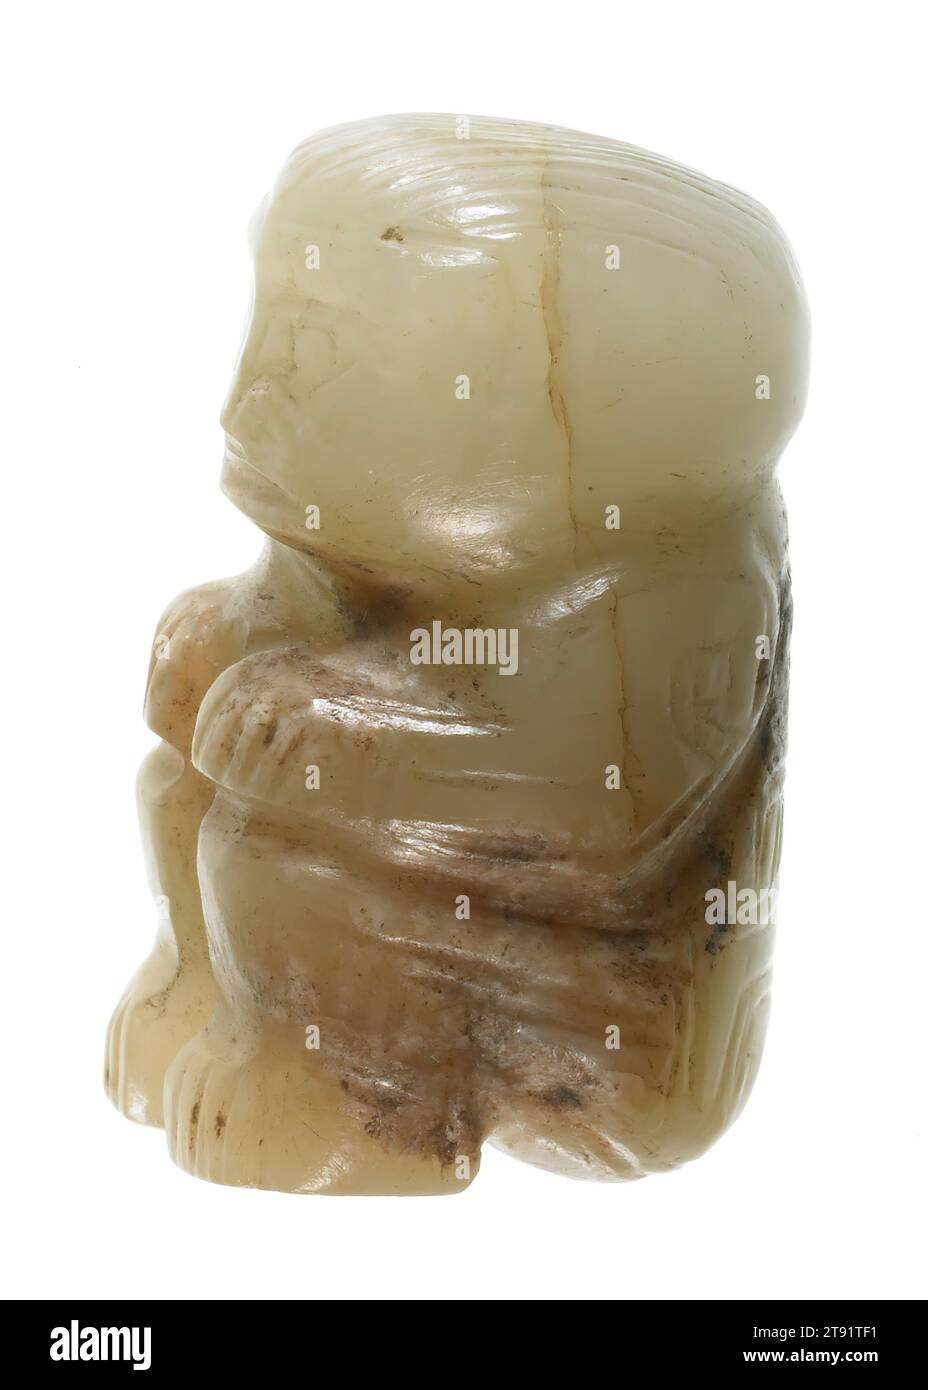 Pendentif figurine assise, 1122-722 av. J.-C., H.1 x L.1/2 x D.5/8 po., jade blanc translucide avec calcification opaque, Chine, 12e-8e siècle av. J.-C. Banque D'Images